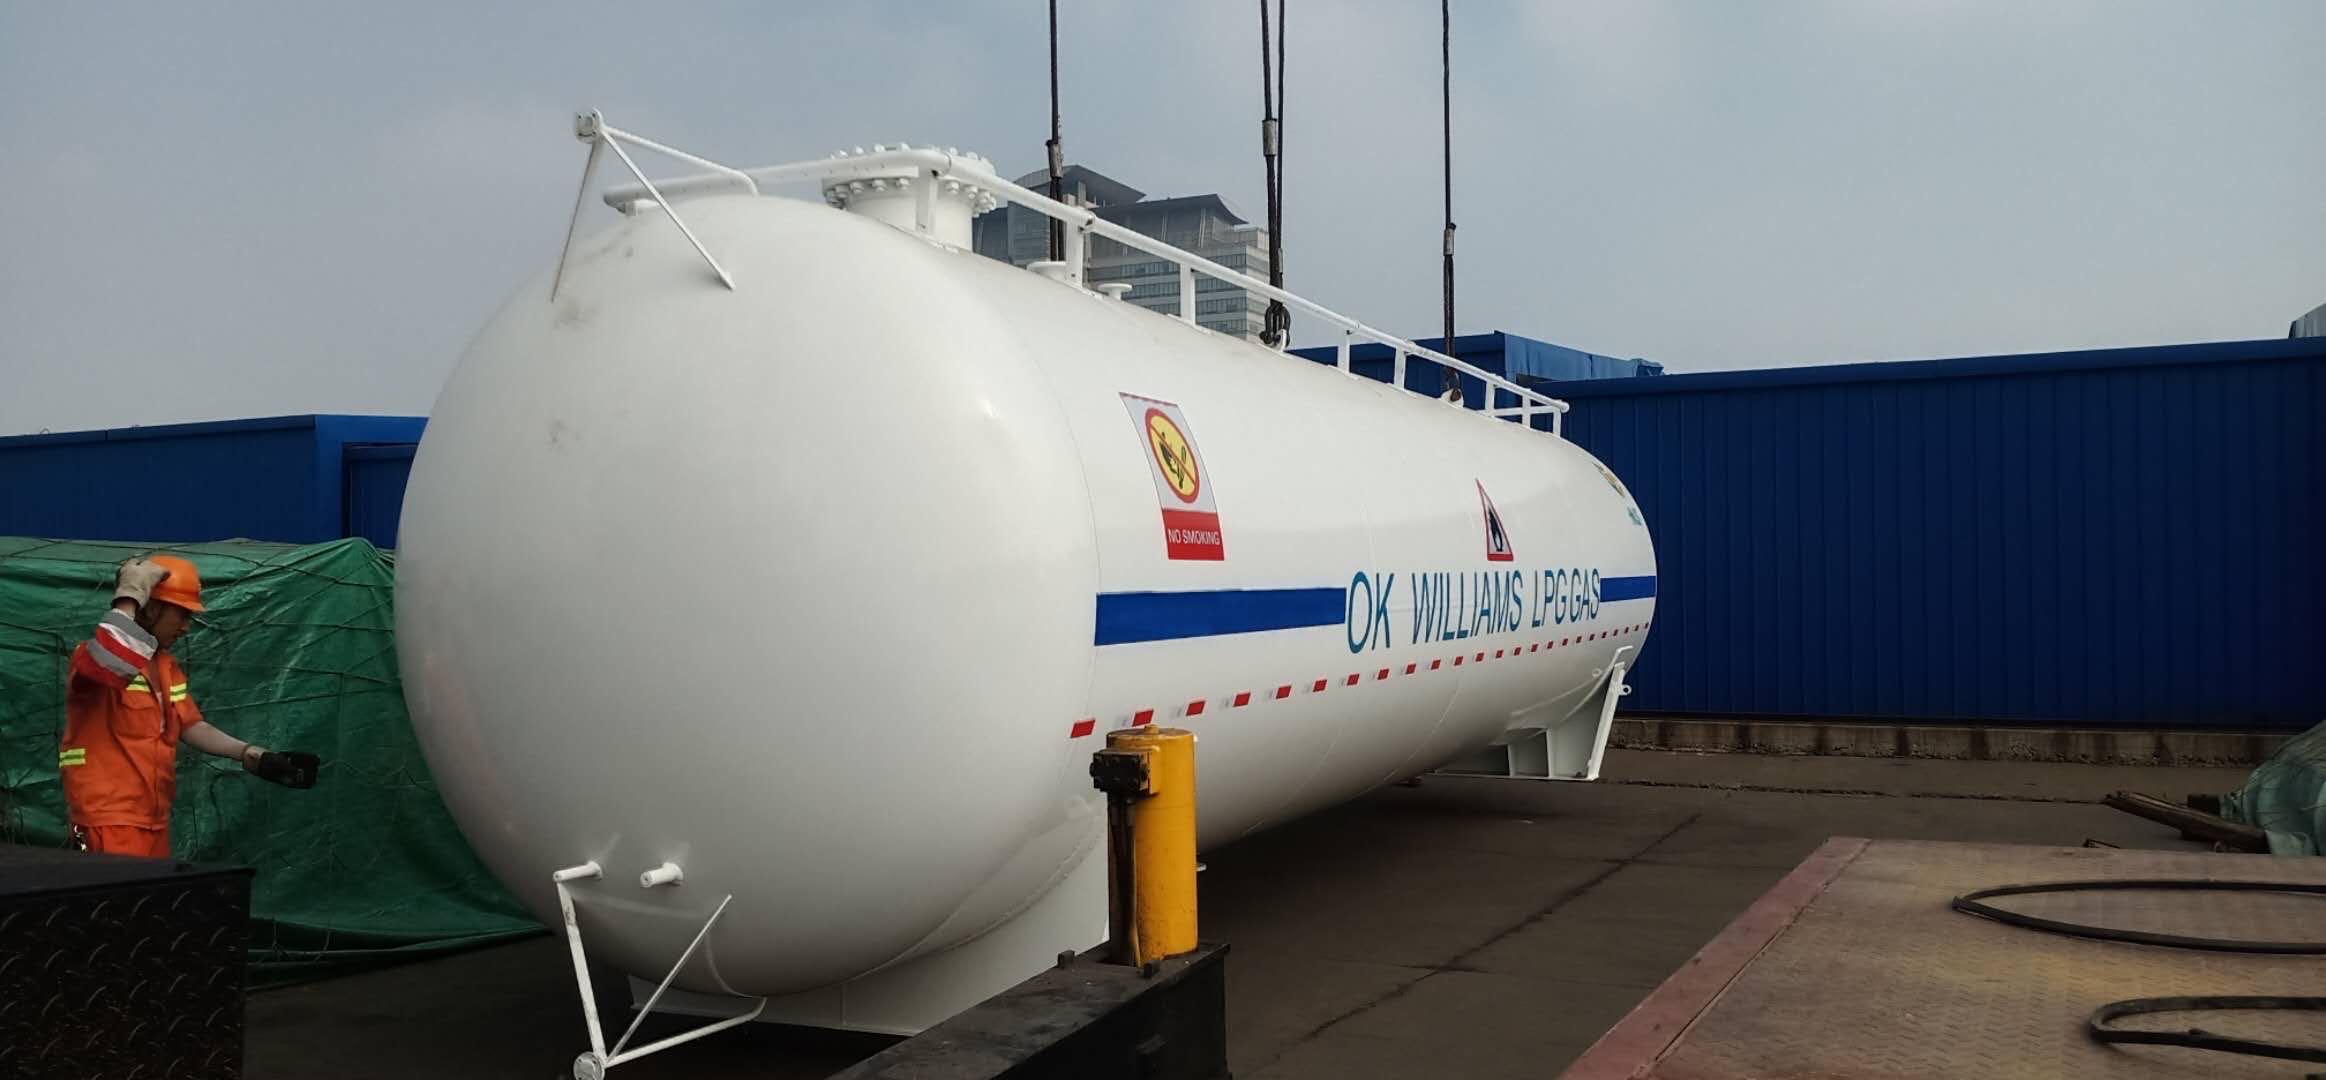 Storage of Liquefied Petroleum Gas Tanks